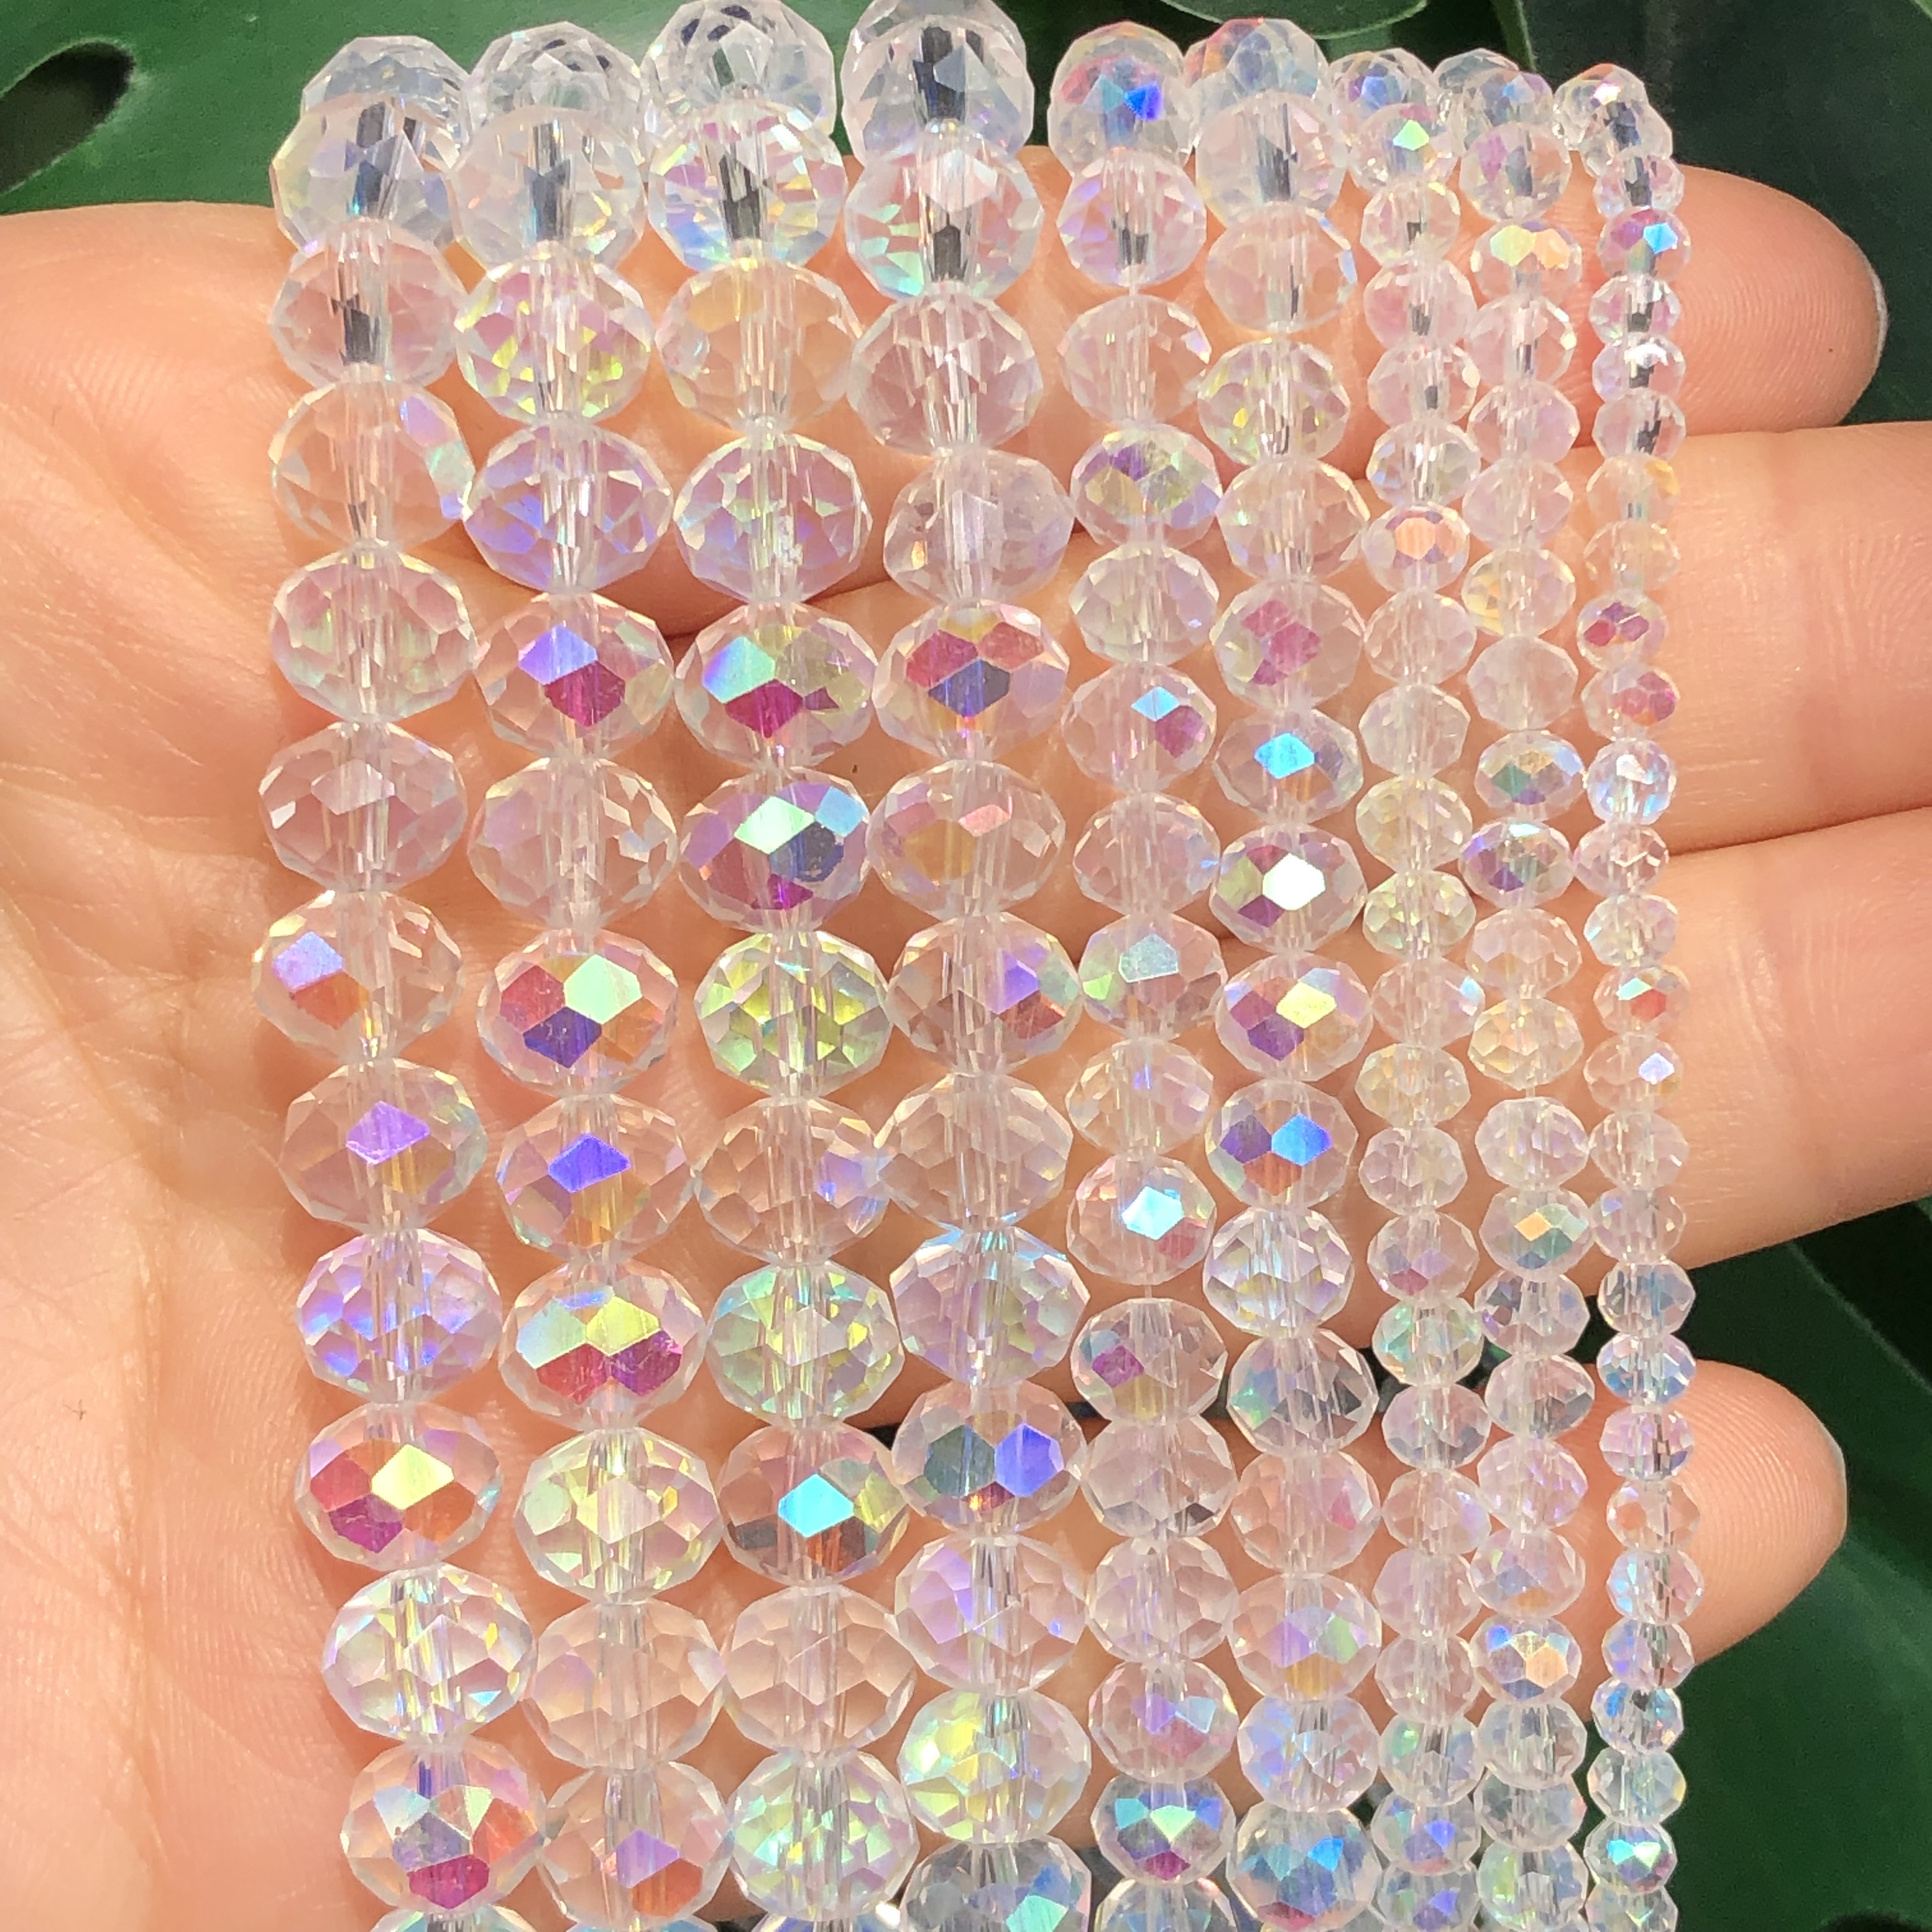 Swarovski Crystal Beads Vs Glass Beads